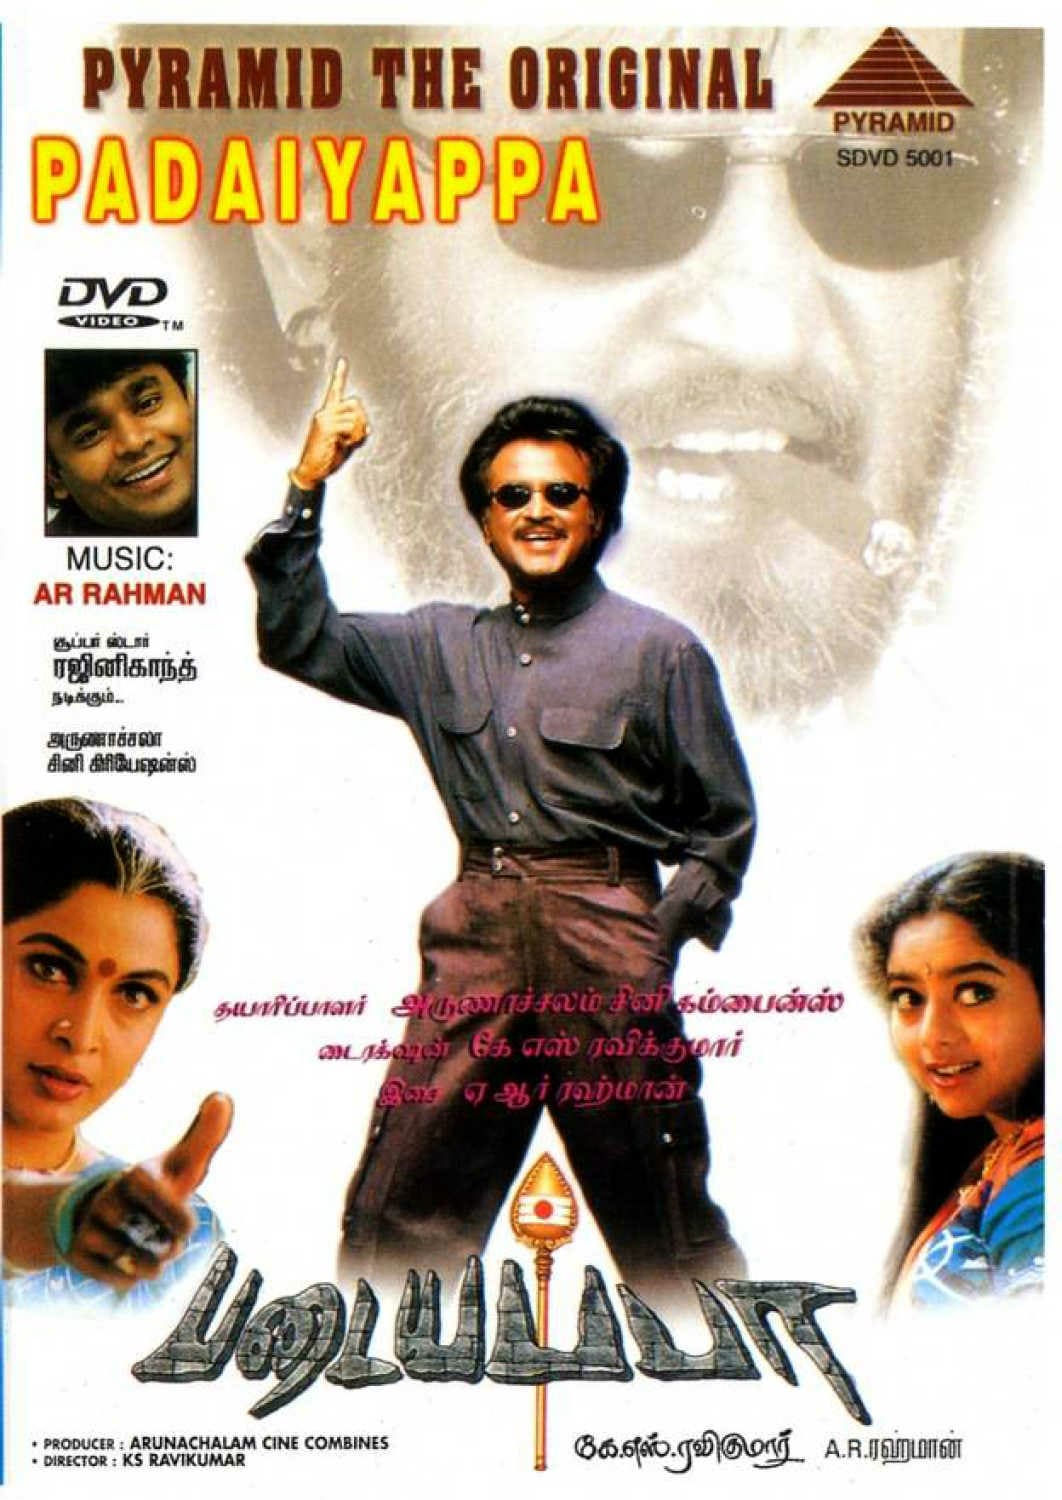 Poster for the movie "Padayappa"